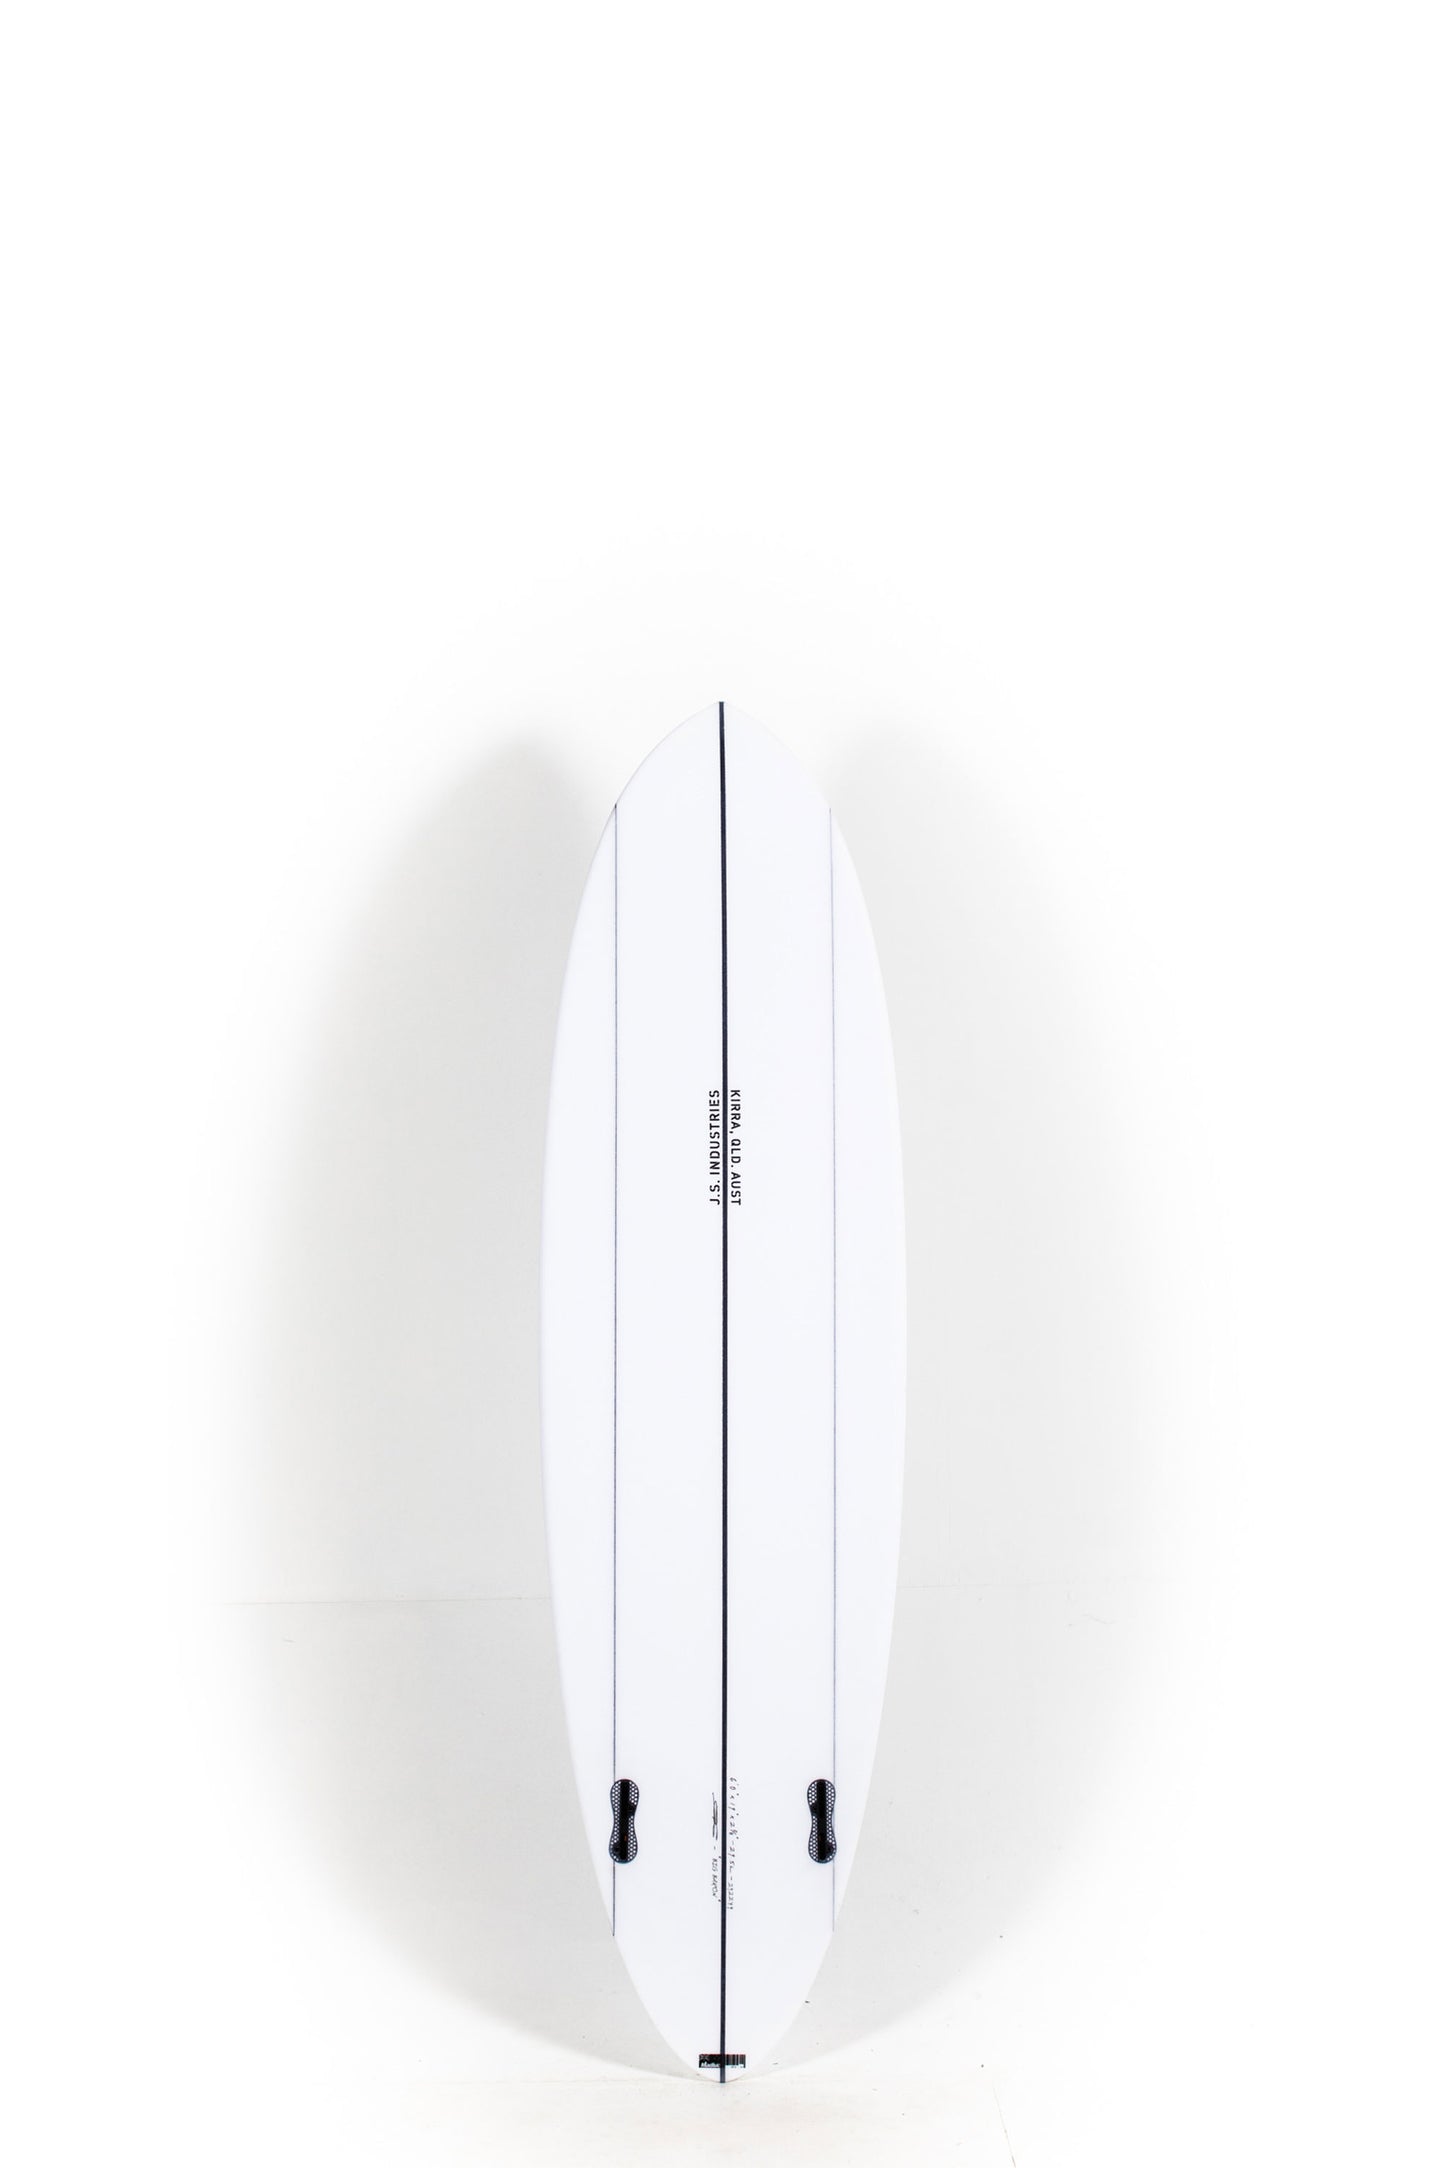 Pukas Surf Shop - JS Surfboards - BIG BARON - 6'0" x 19 x 2 3/8 x 29,5L. - BIGBARON600